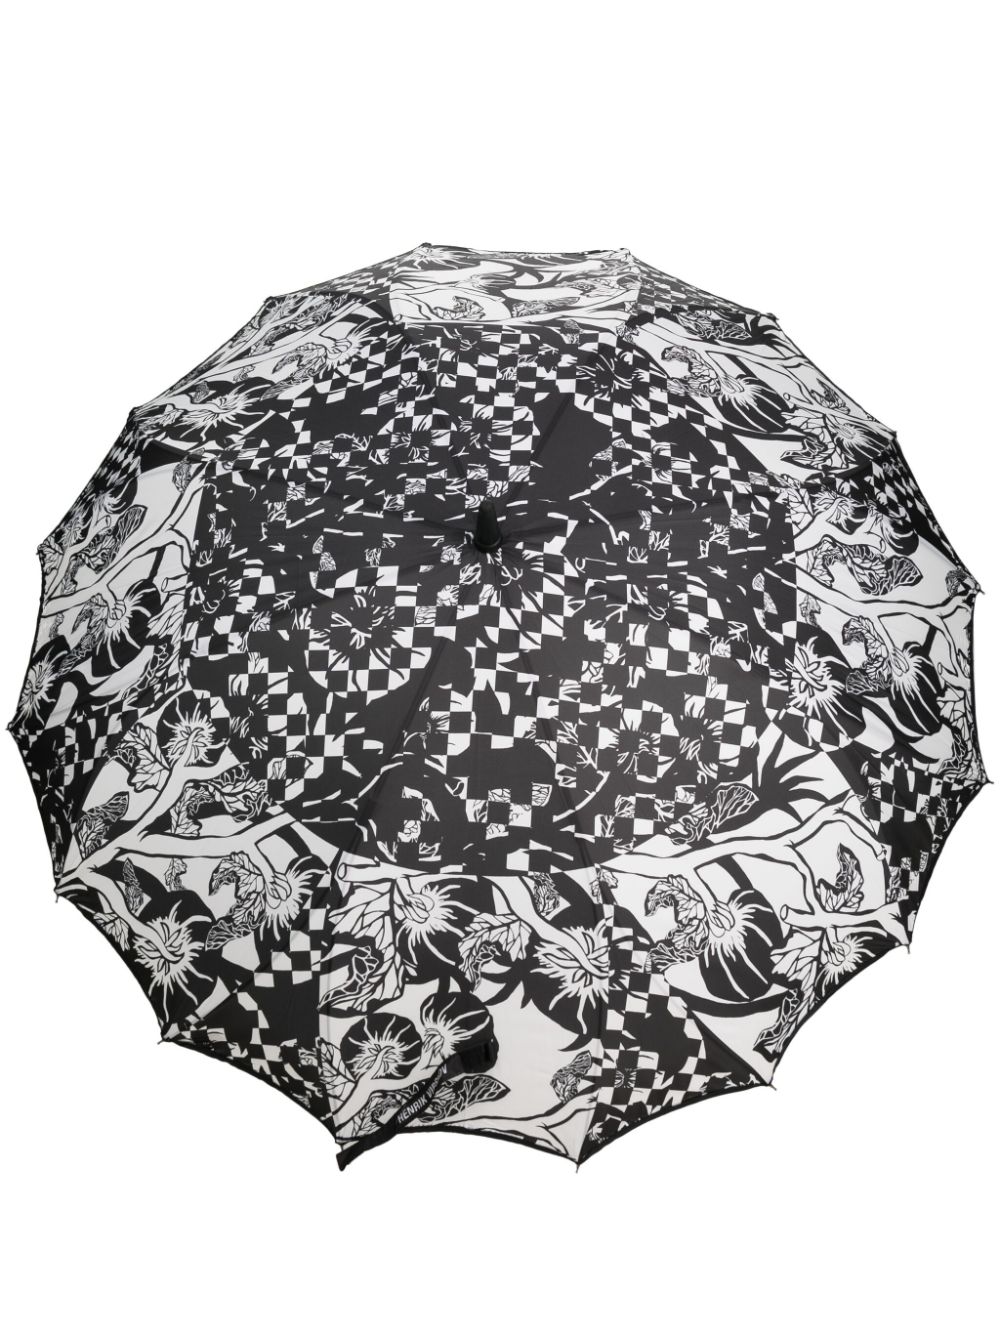 Henrik Vibskov Kalaidoscope umbrella - Black von Henrik Vibskov